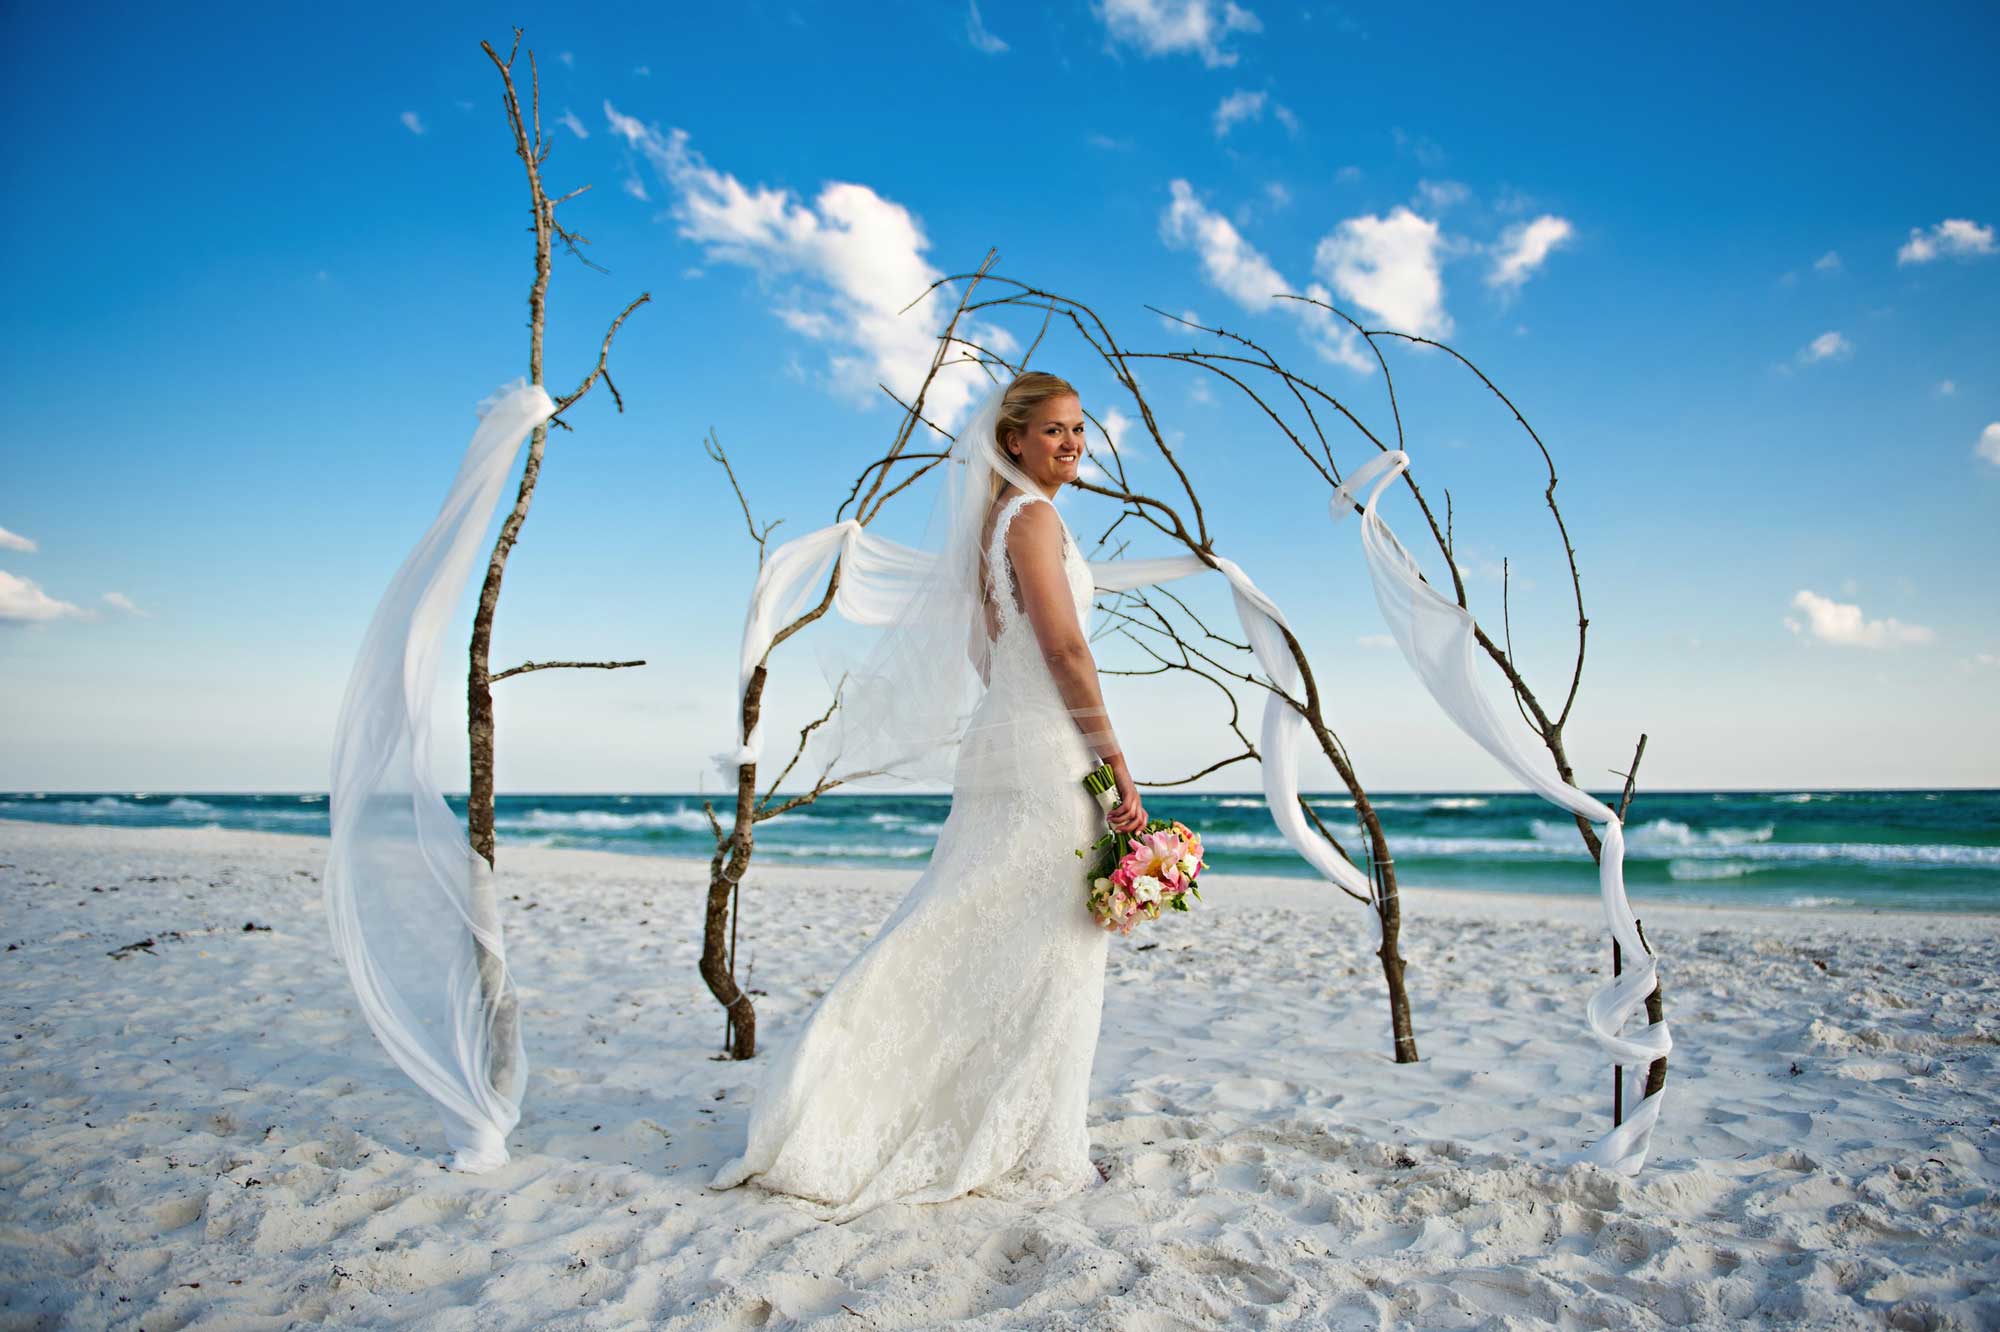 https://www.islands.com/wp-content/uploads/2021/09/the-best-wedding-venues-romantic-views09julie-twig-arbor.jpg